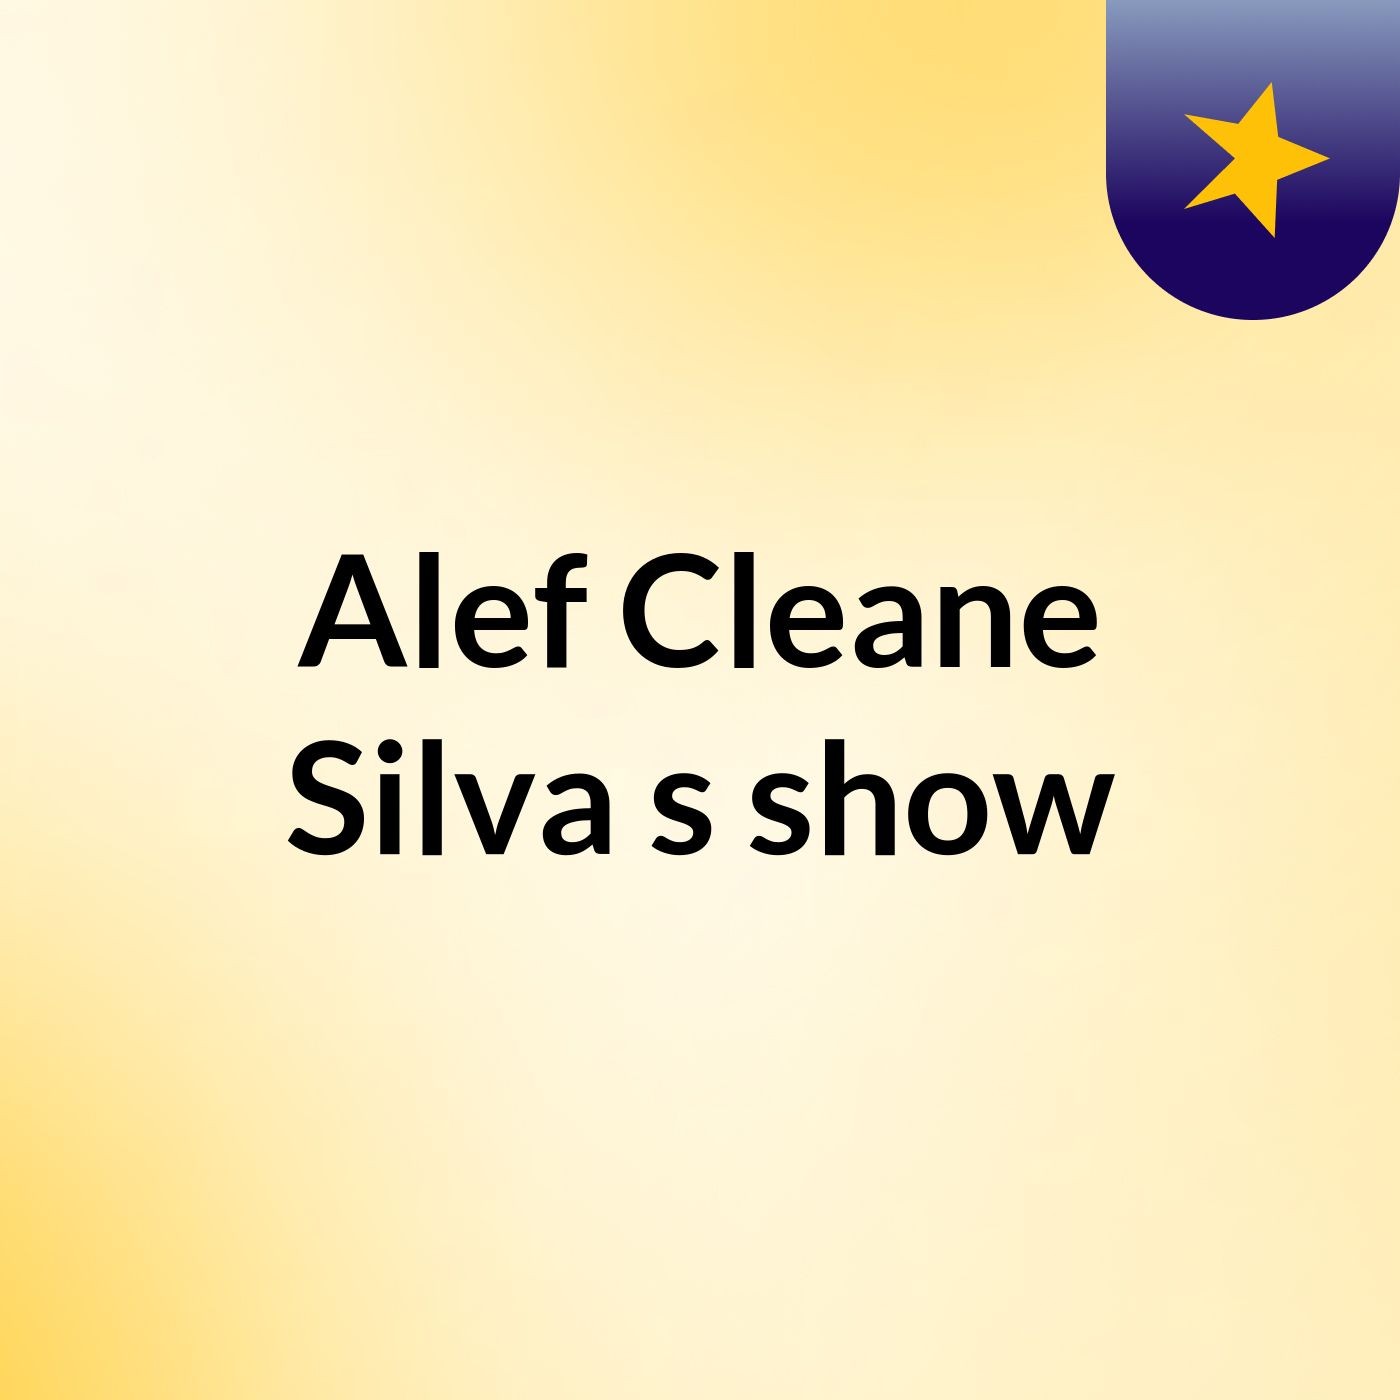 Alef Cleane Silva's show